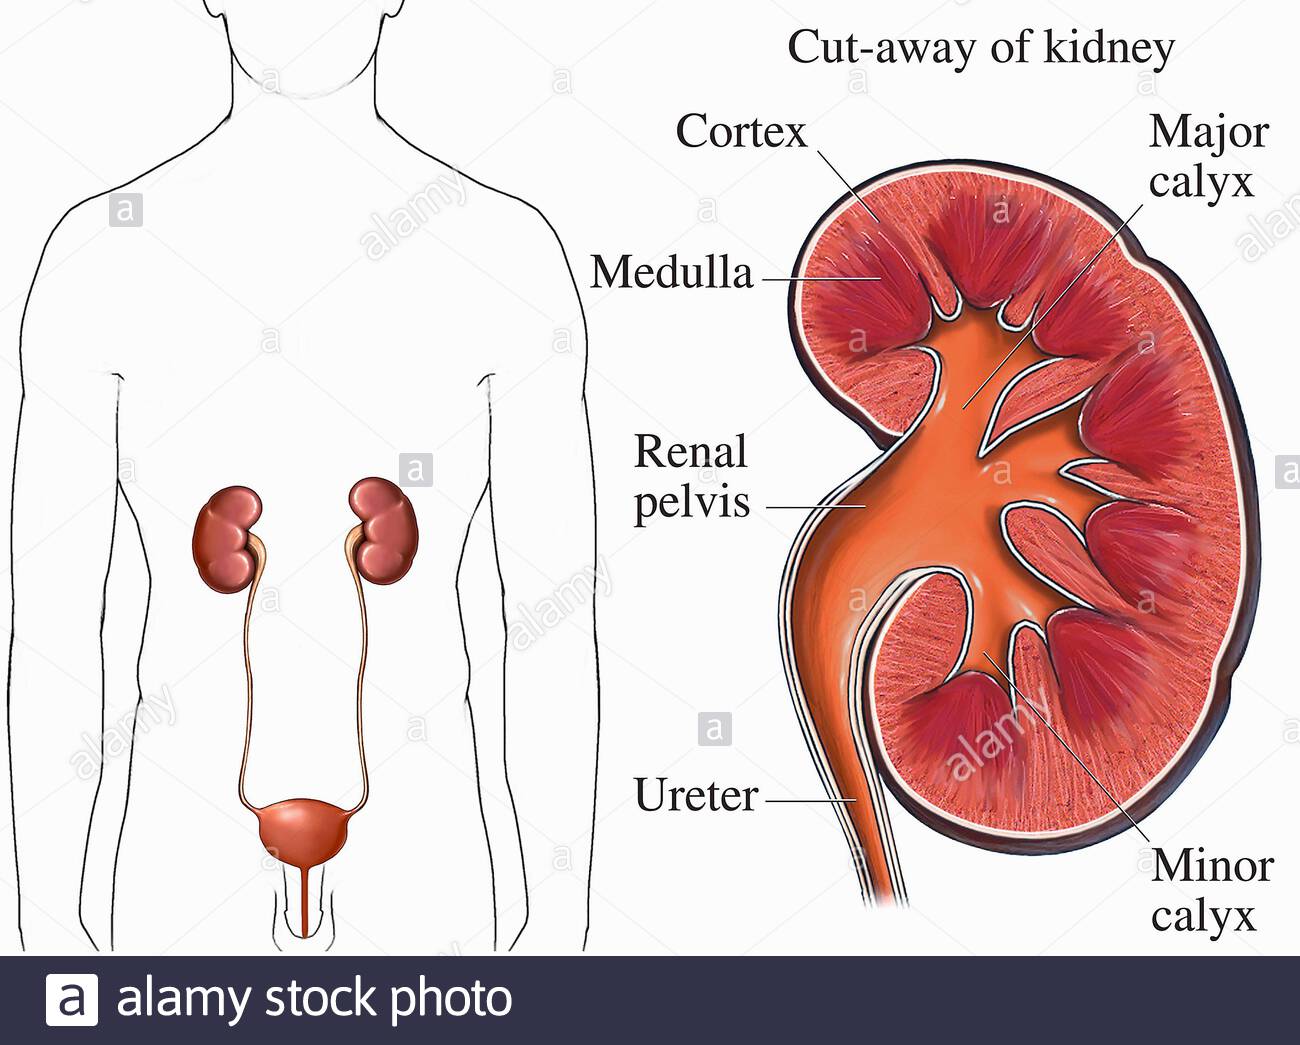 Major renal Calyces. Cortex Kidney. Anatomical positions of Kidney. Cut away